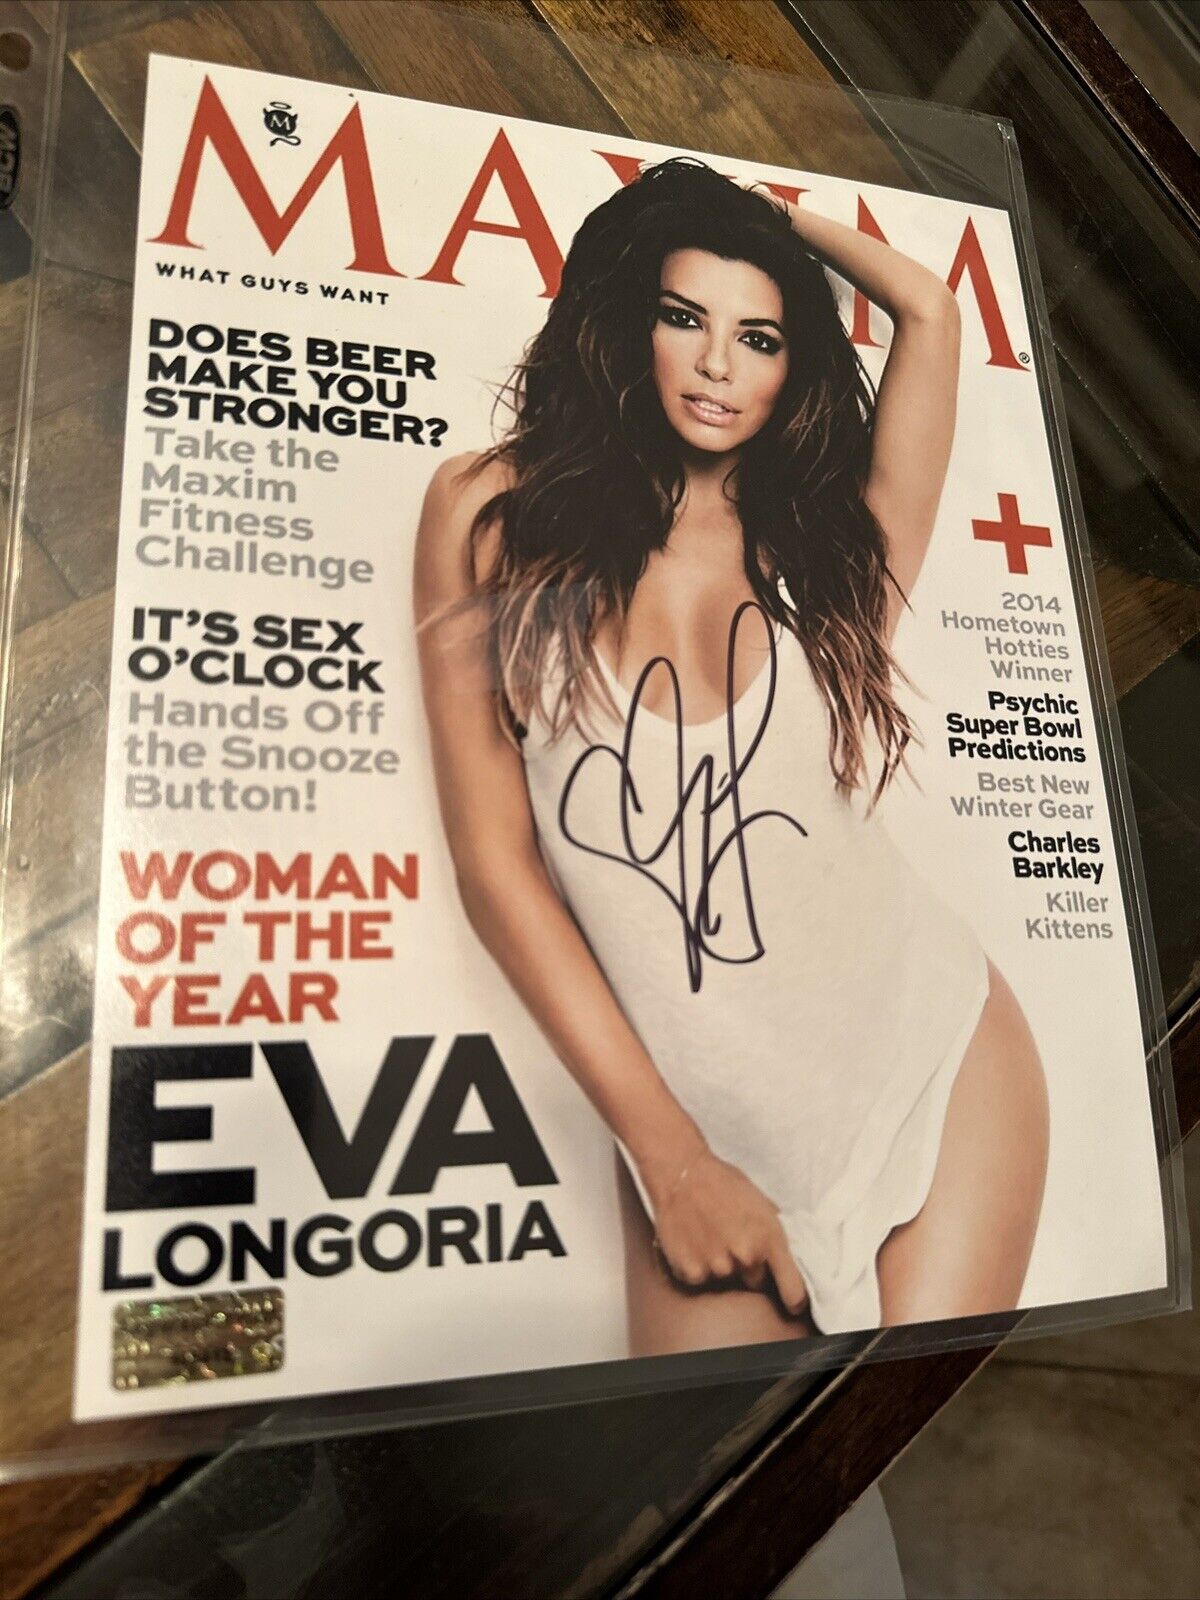 EVA LONGORIA Signed 8x10 Photo Autographed with COA